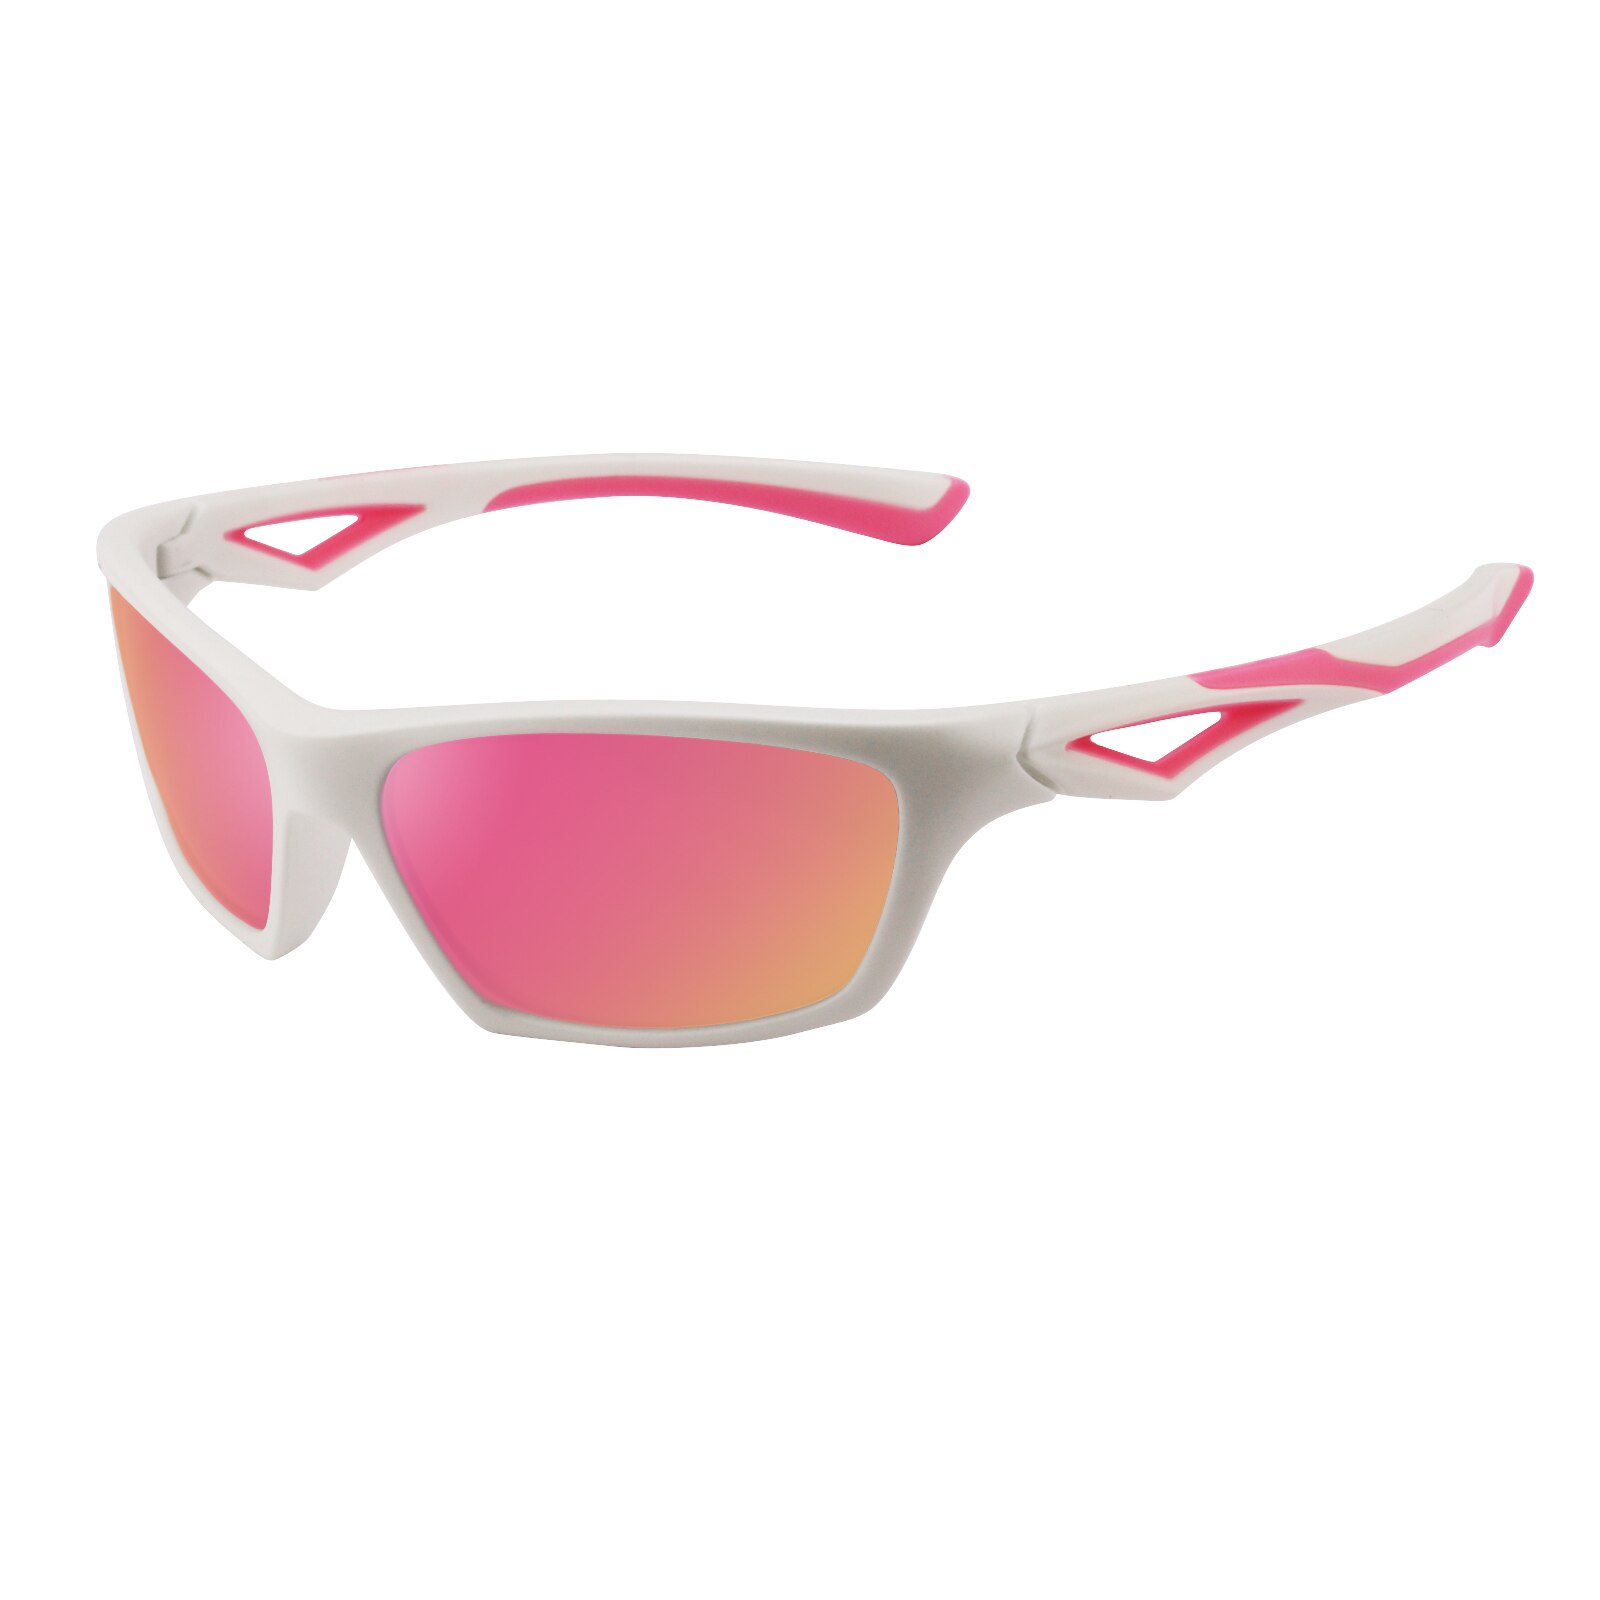 Kids Polarized Sunglasses TR90 Unbreakable Flexible Sport Glasses UV Protection for Boys Girls Age 3-10 Child Eyewear UV400: White PInk l Pink